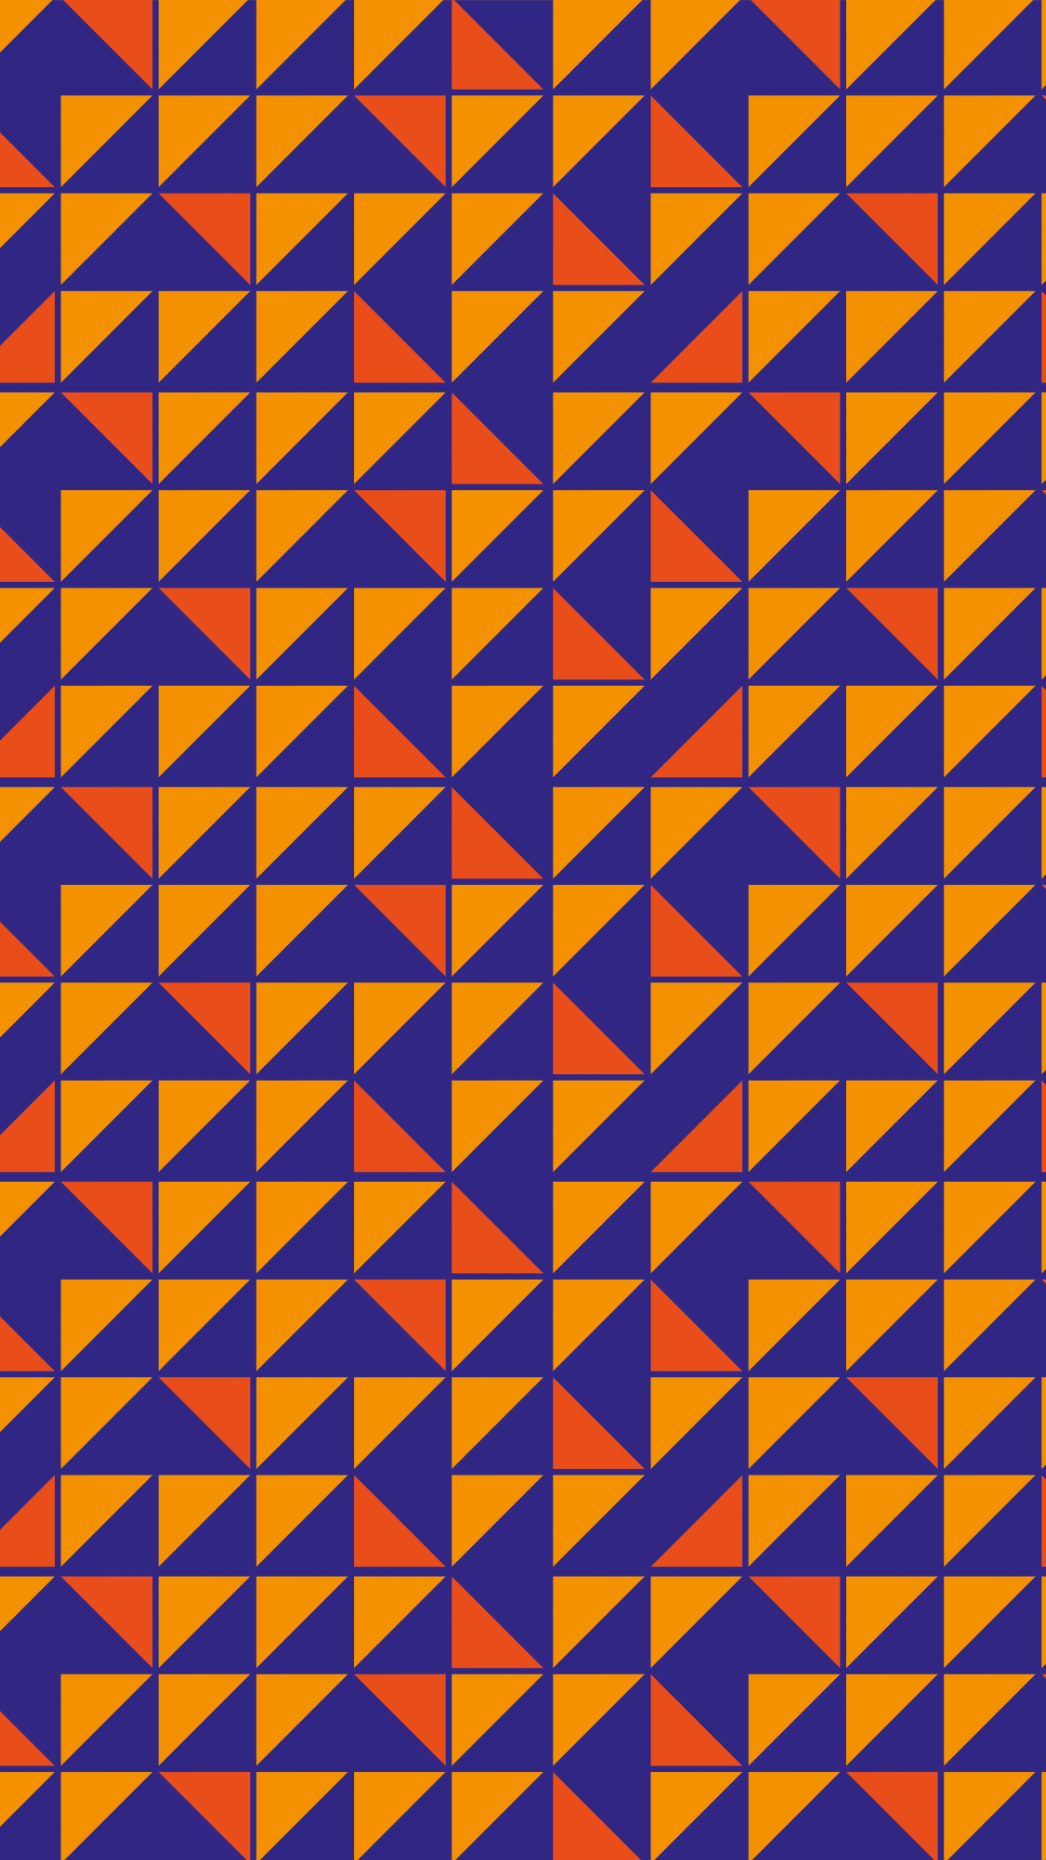 Repeat pattern, illustrator, 2020.